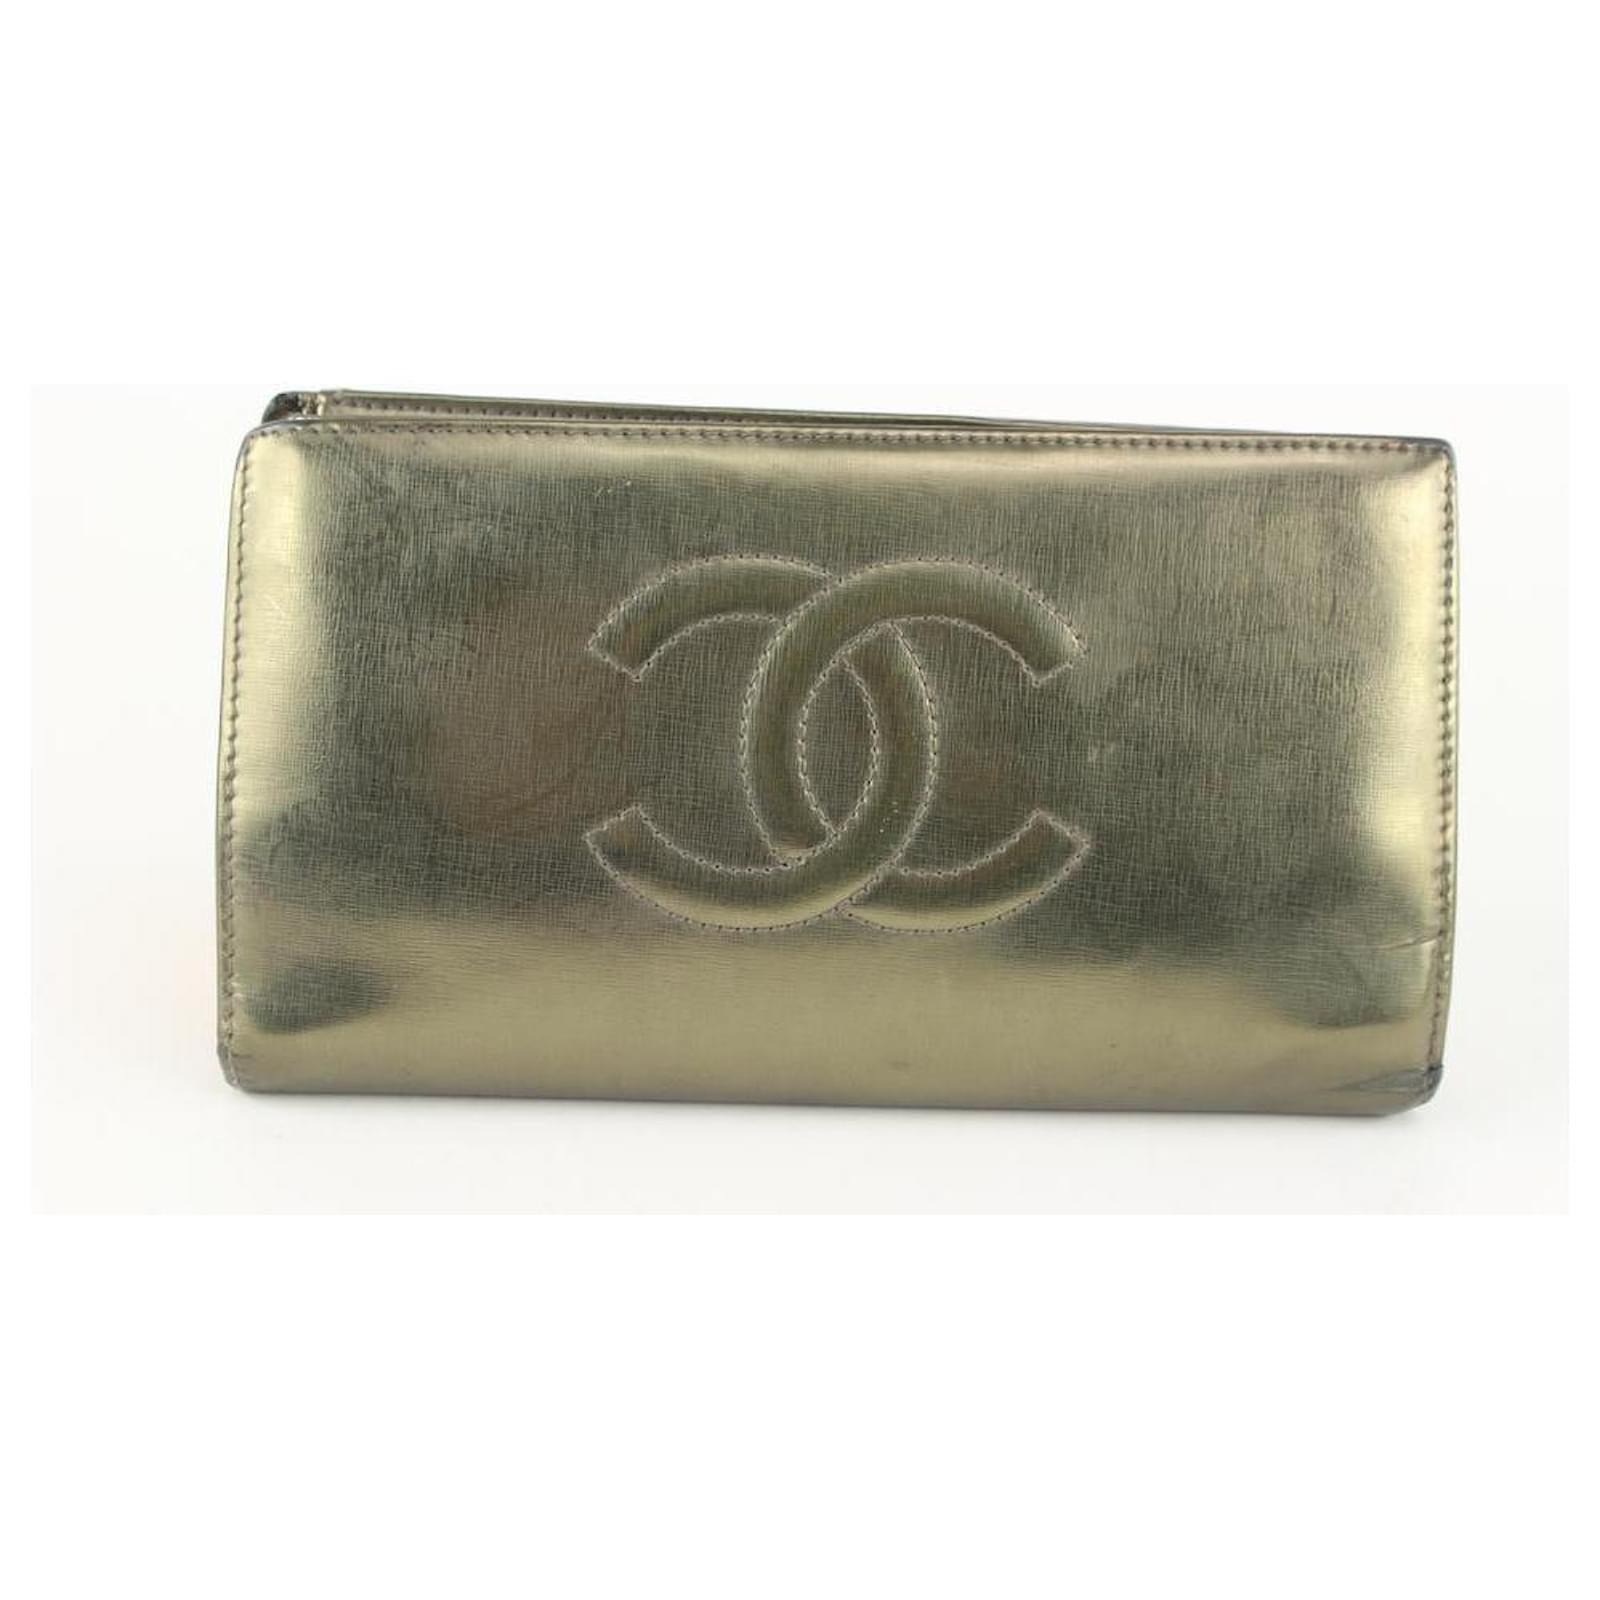 Chanel Metallic Dark Gold Long Flap Wallet Leather White gold ref ...